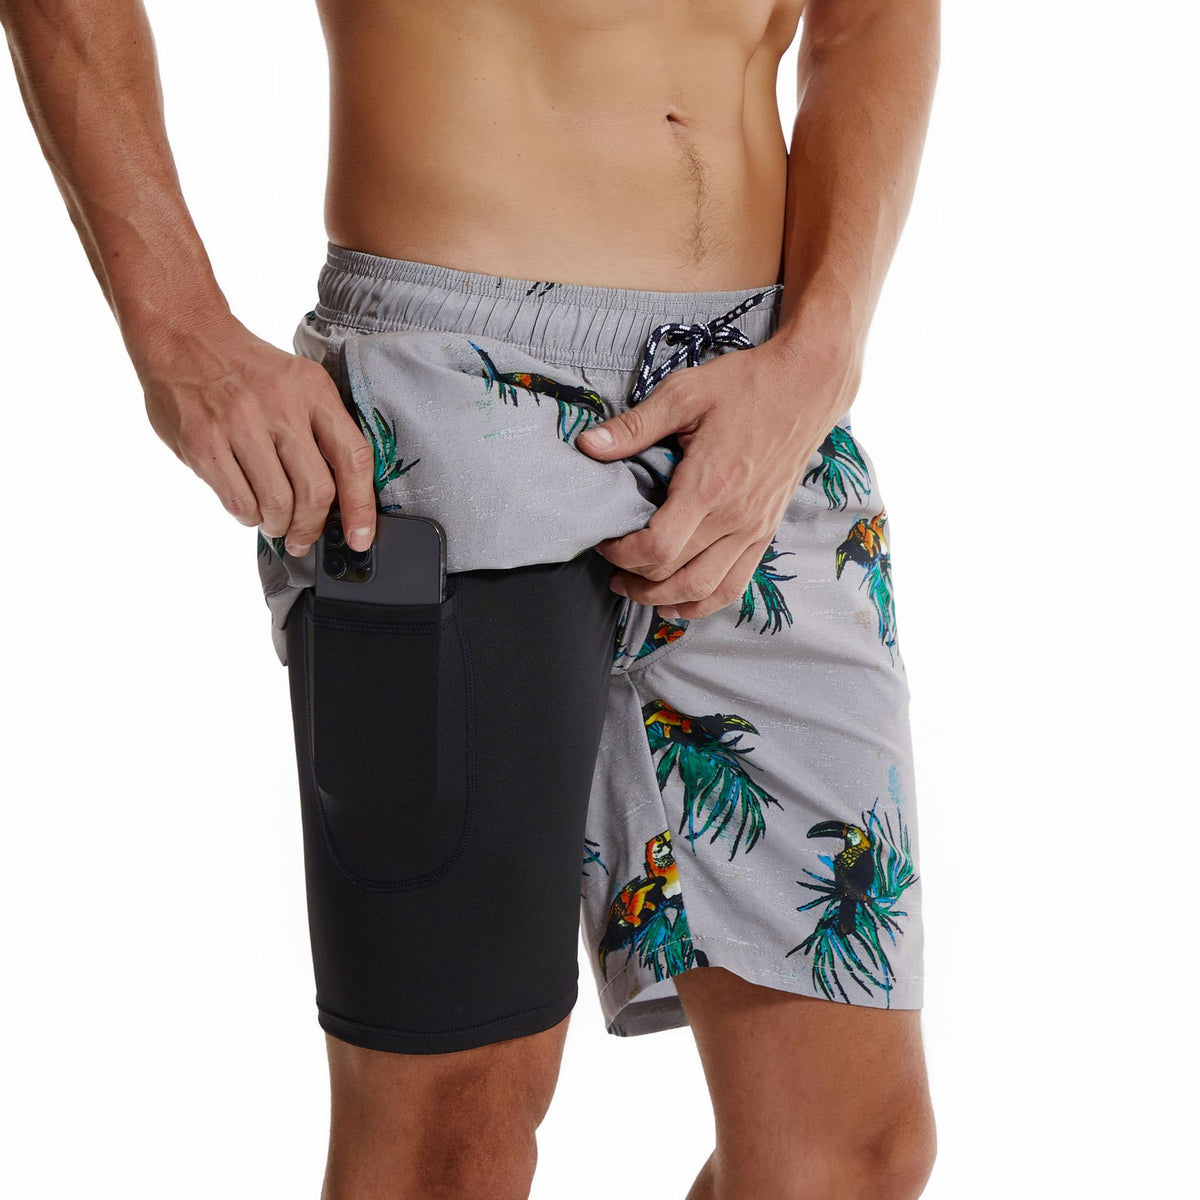 Men's Swim Trunks with Compression Liner Quick Dry 7" Inseam Swimsuit Swimwear - Toucans